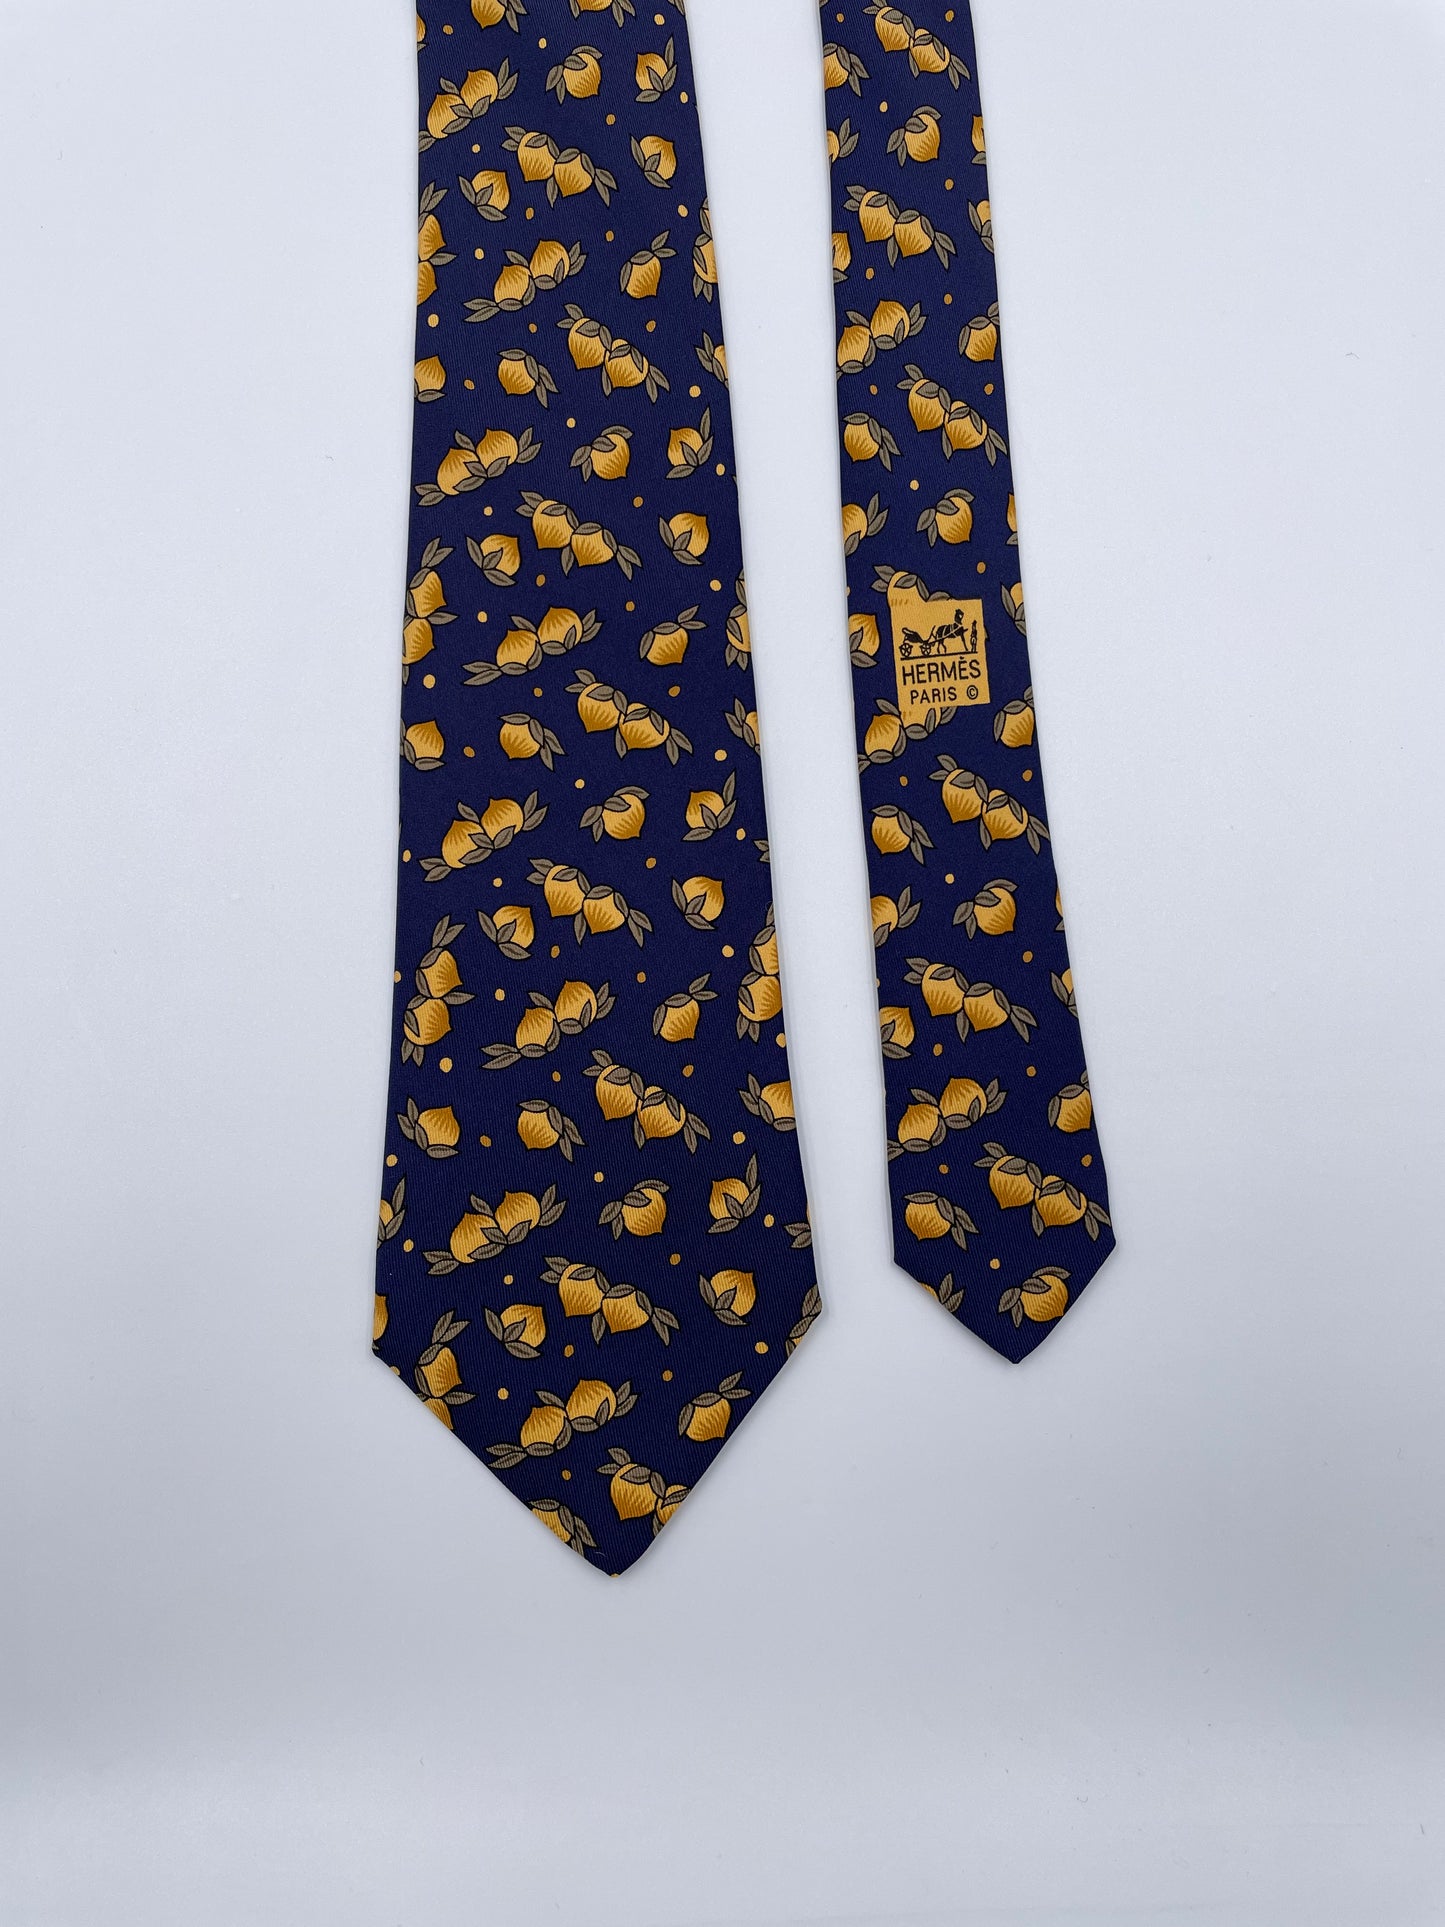 Cravatta Hermès con limoni sfondo blu c.7534IA